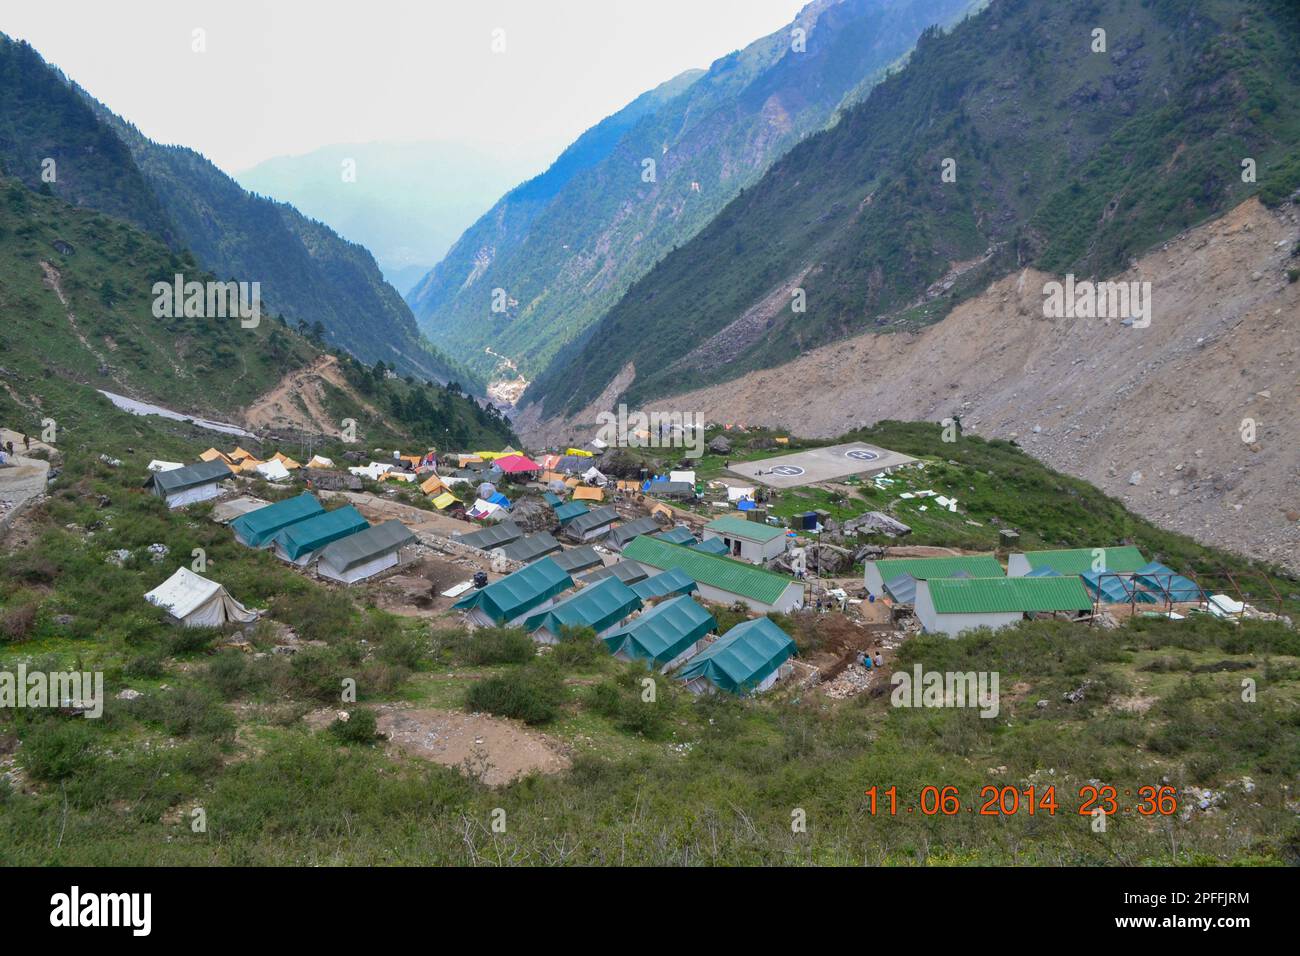 Kedarnath base camp established after Kedarnath disaster. In June 2013, a multi-day cloudburst centered on the North Indian state of Uttarakhand cause Stock Photo